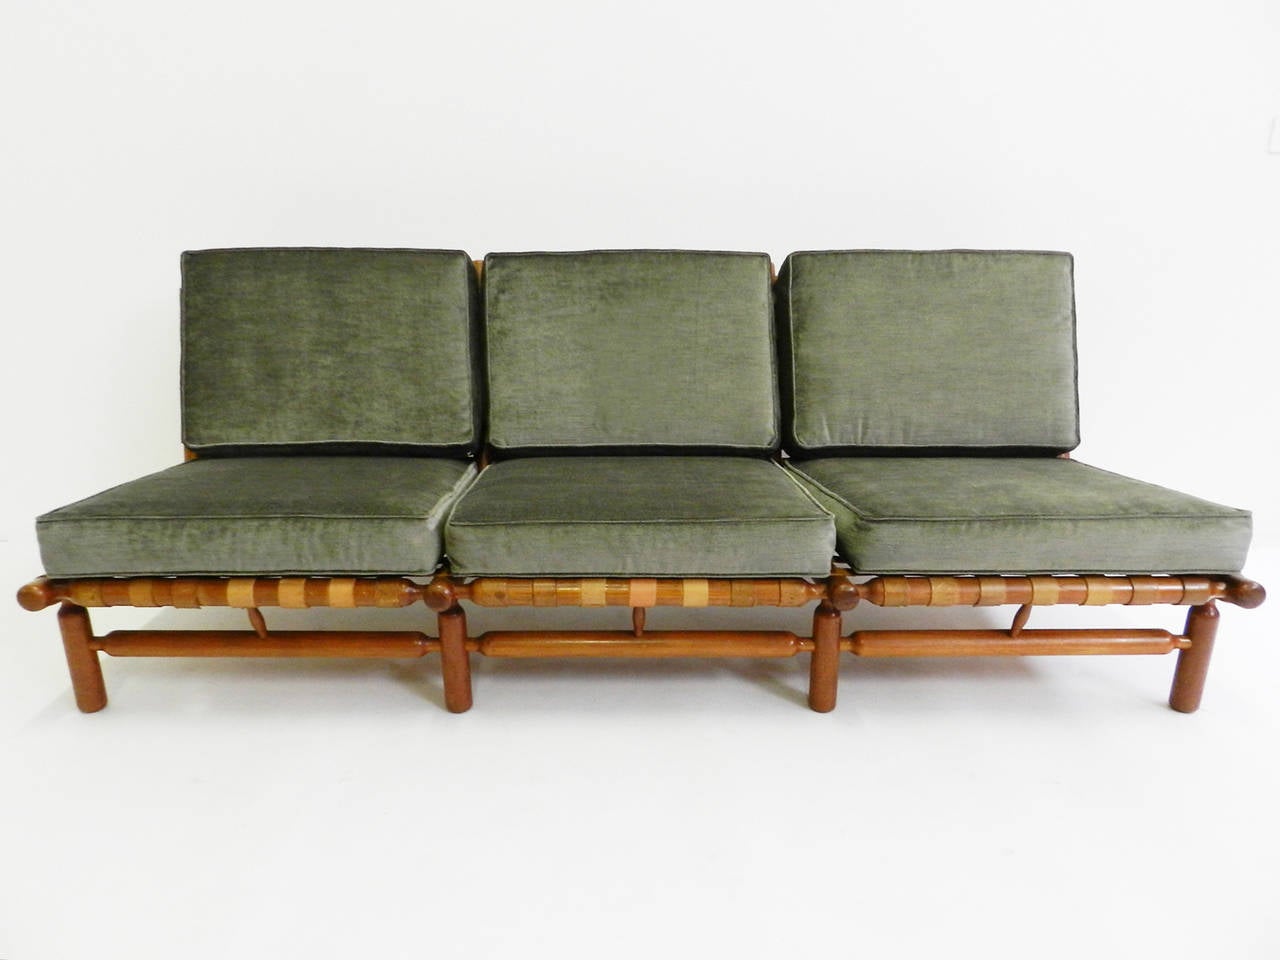 Italian Rare 1957 Tapiovaara Three-Seat Sofa by Esposizione La Permanente Mobili, Italy